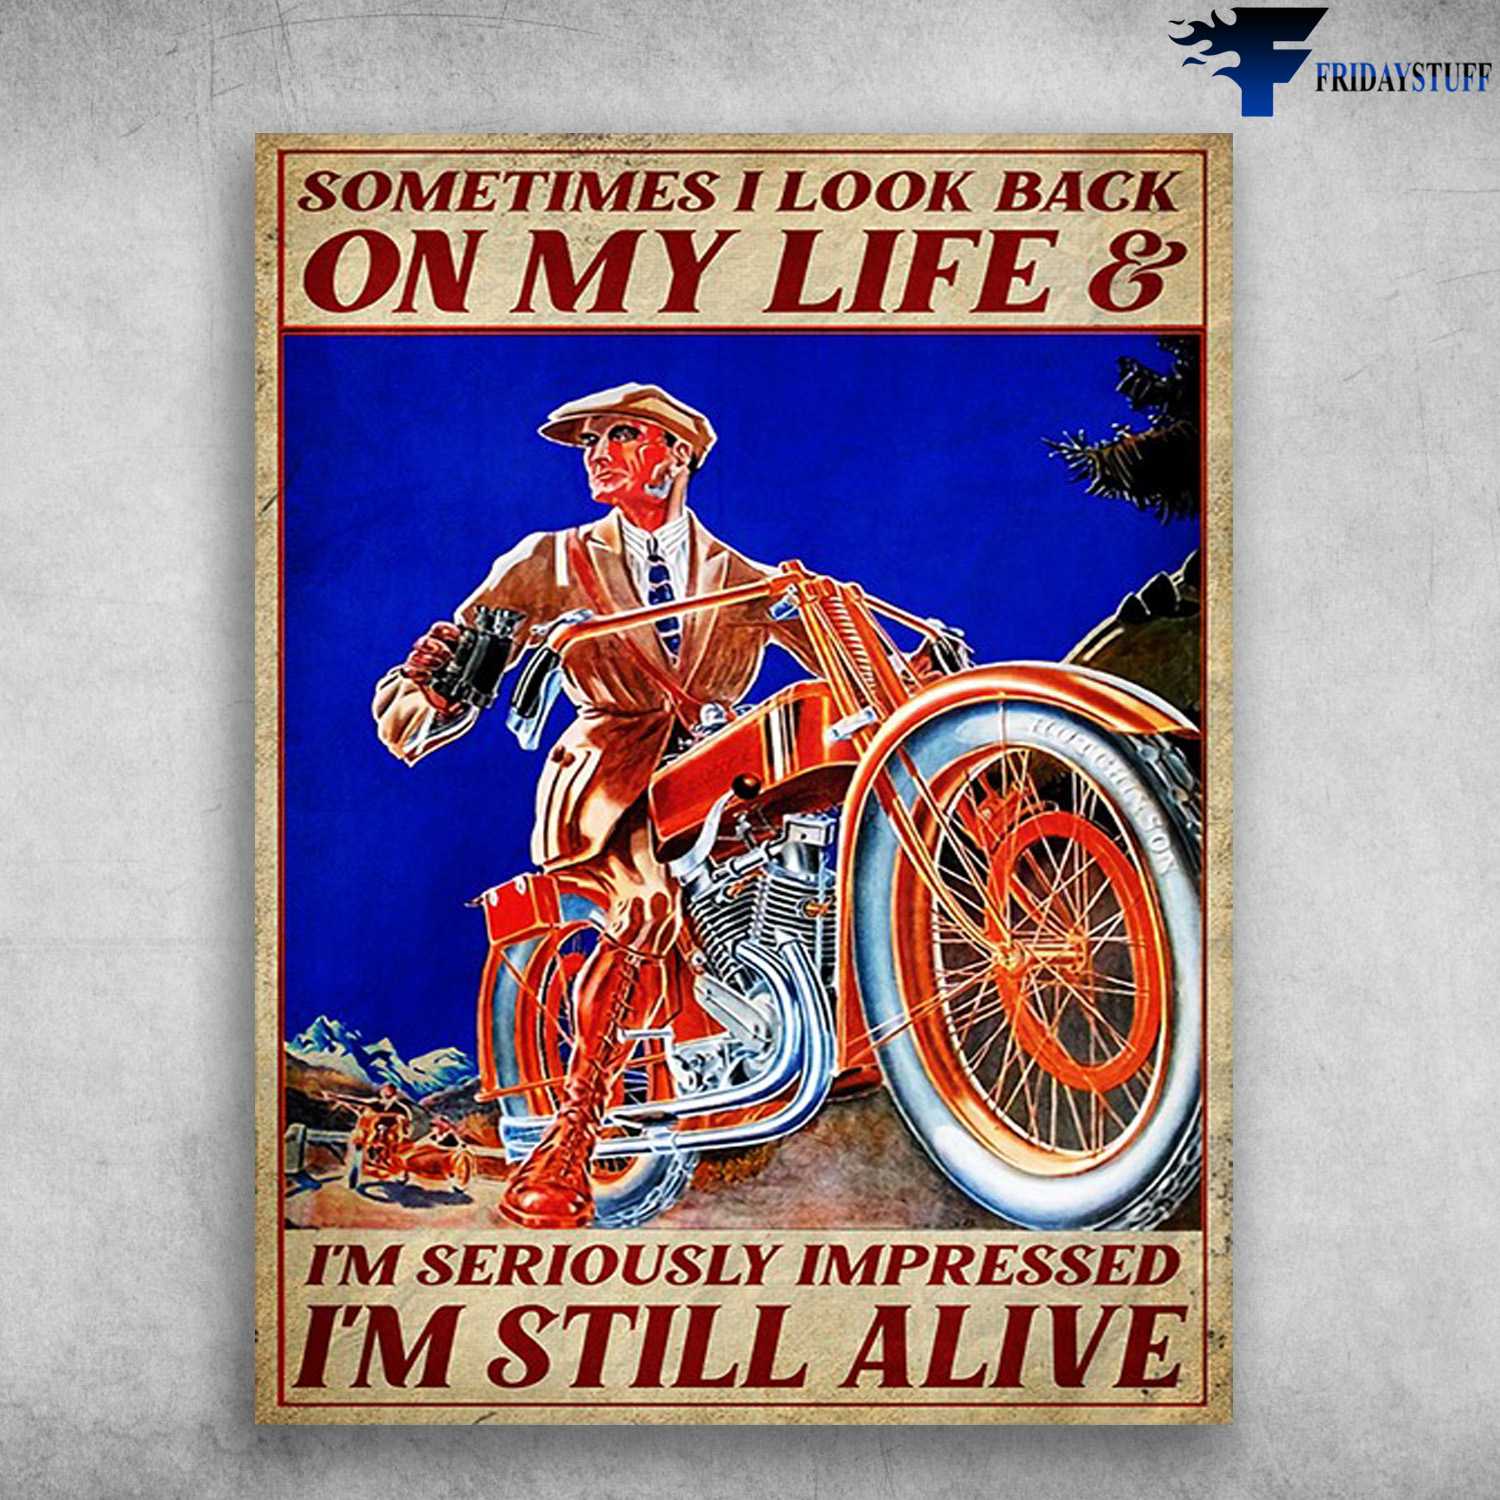 Biker Poster, Motorcycle Man - Sometimes I Look Back On My Life, I'm Seriously Impressed, I'm Still Alive